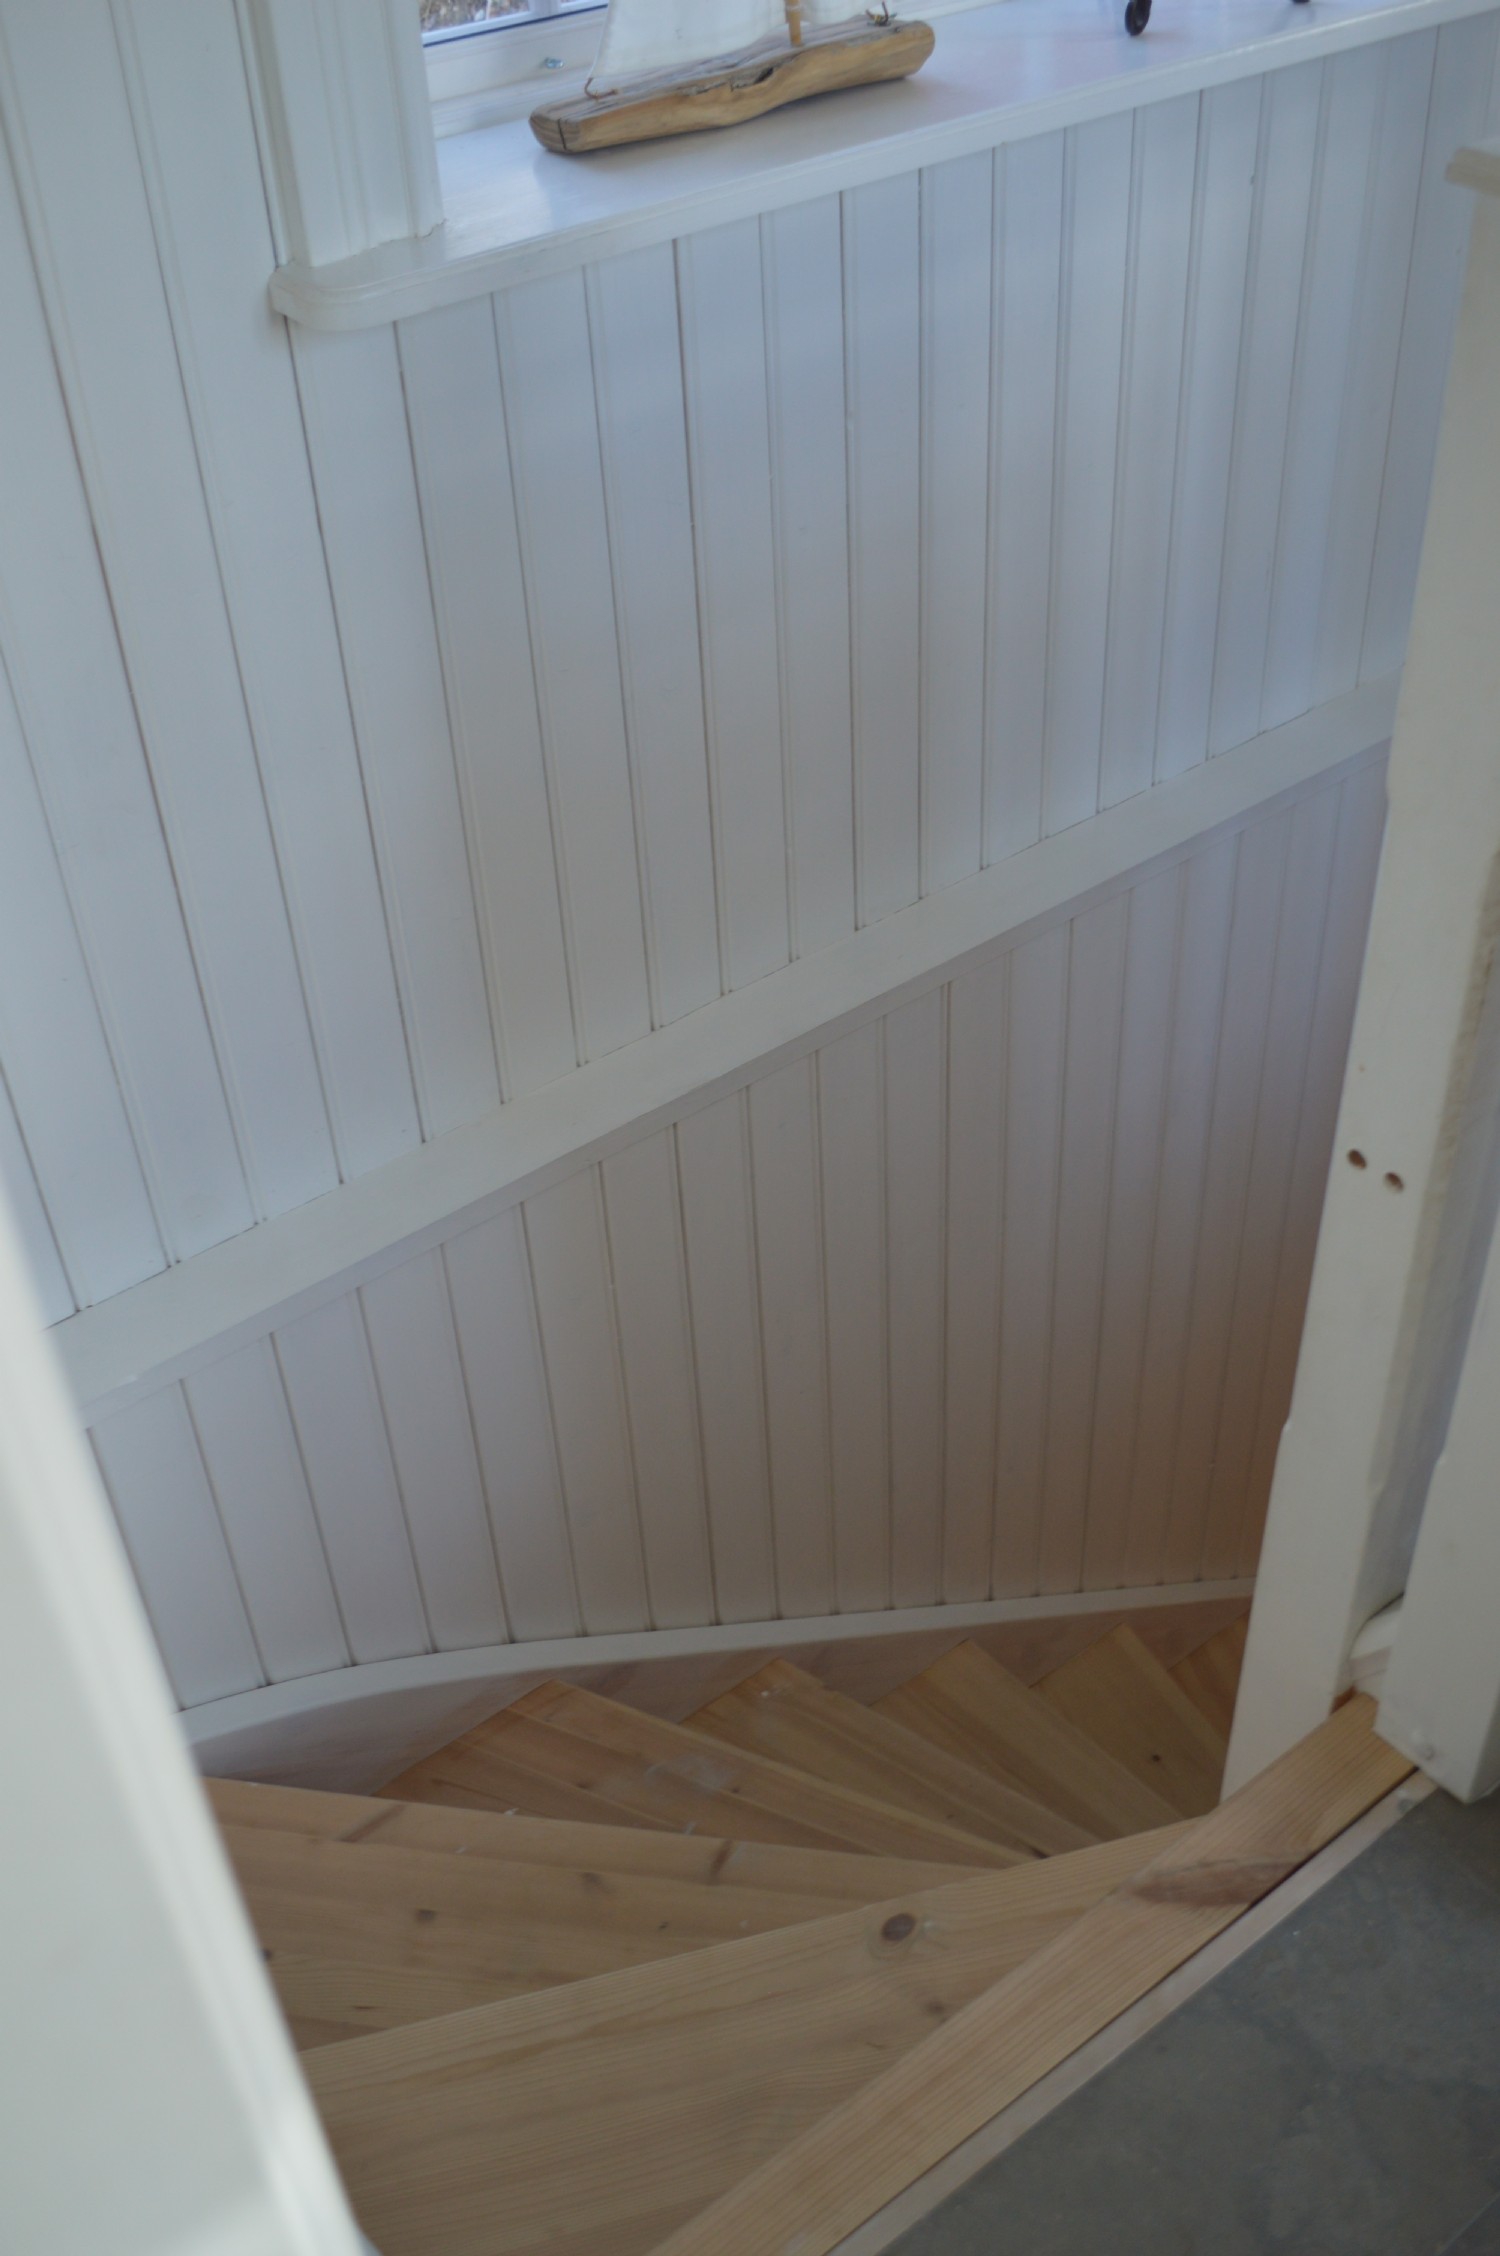 Trappan till kllarplan/ Stair to basement floor 